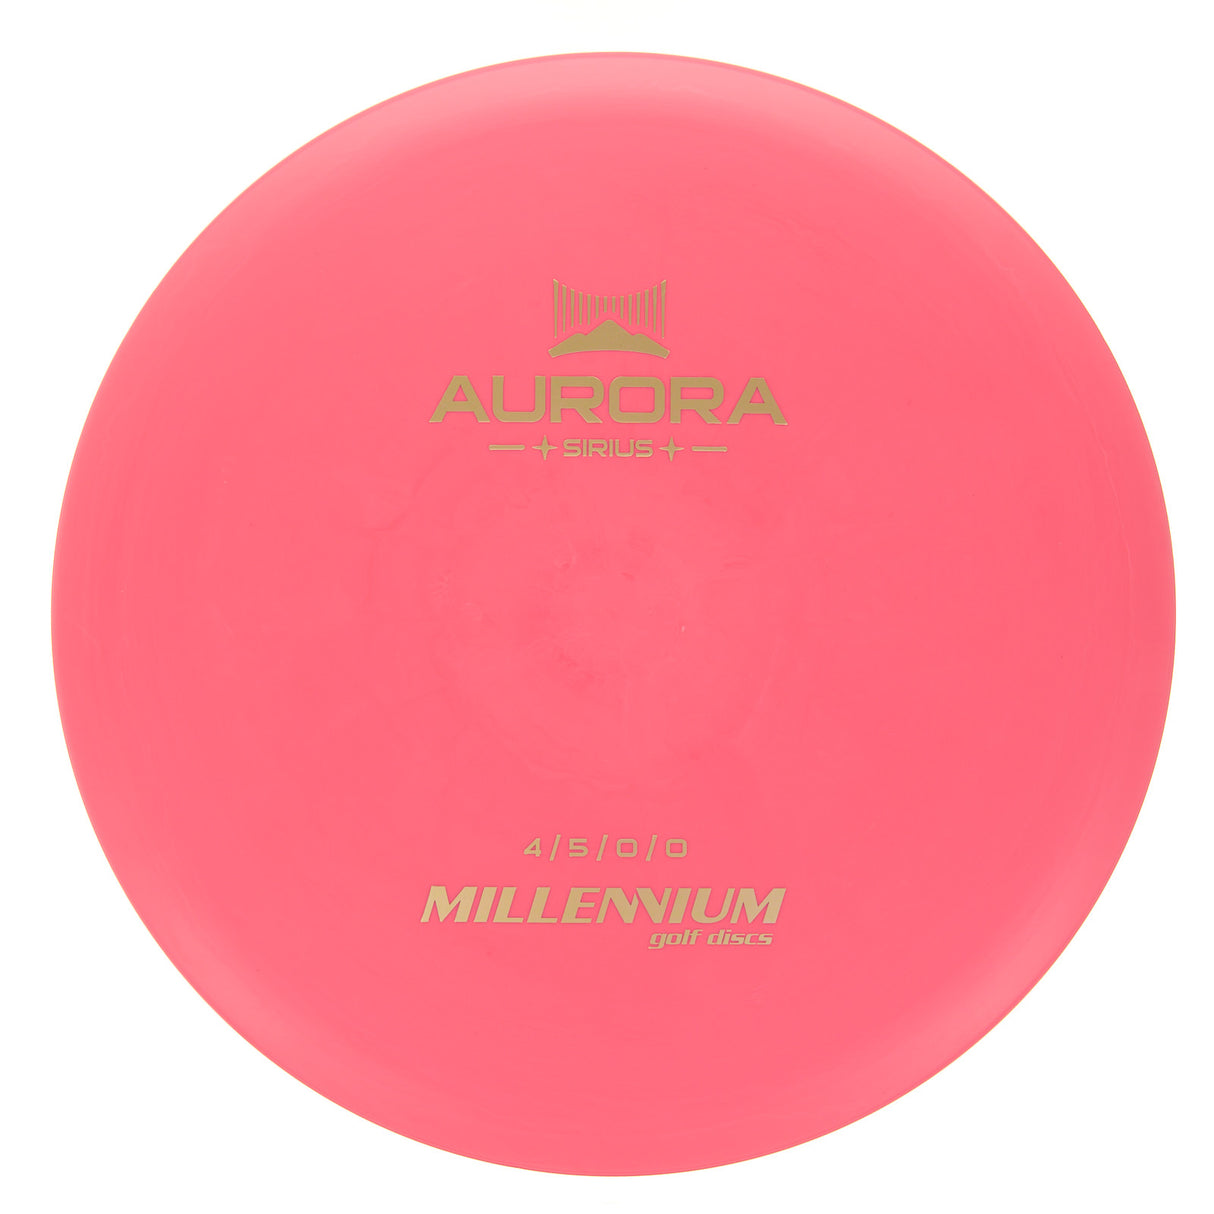 Millennium Aurora MS - Sirius 181g | Style 0002